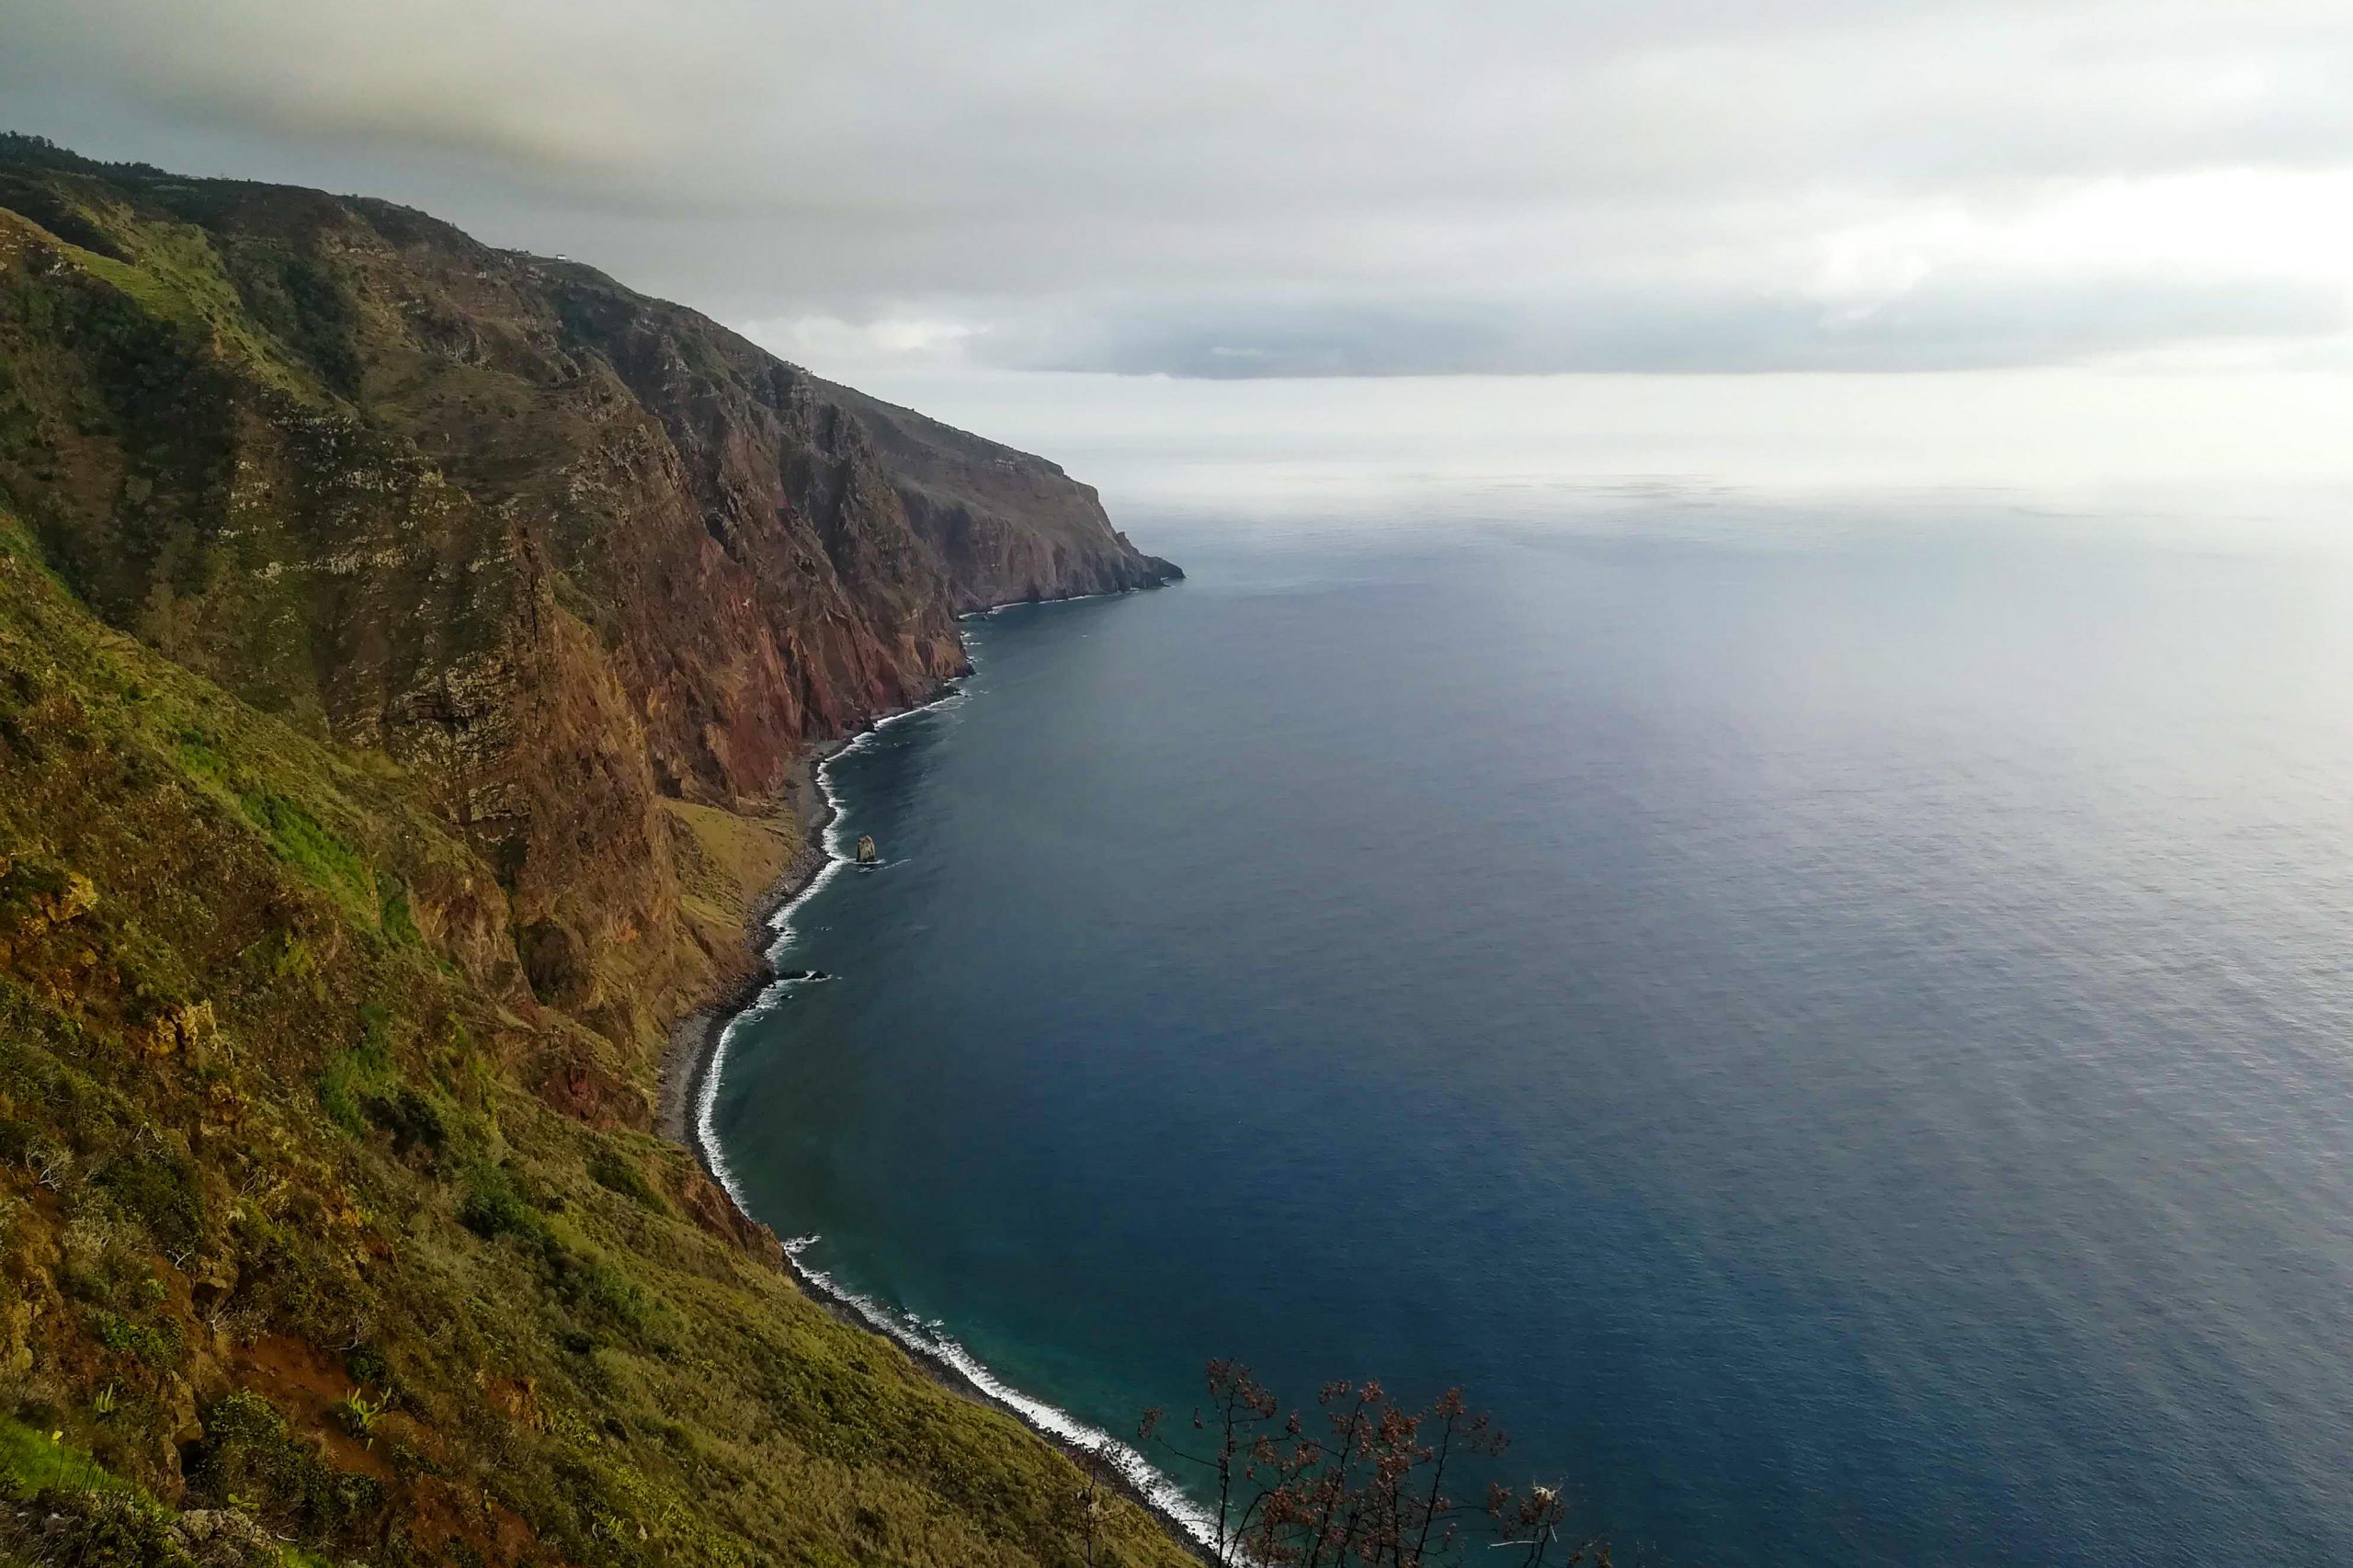 Perspetiva a partir do Miradouro do Fio, na costa oeste da Madeira